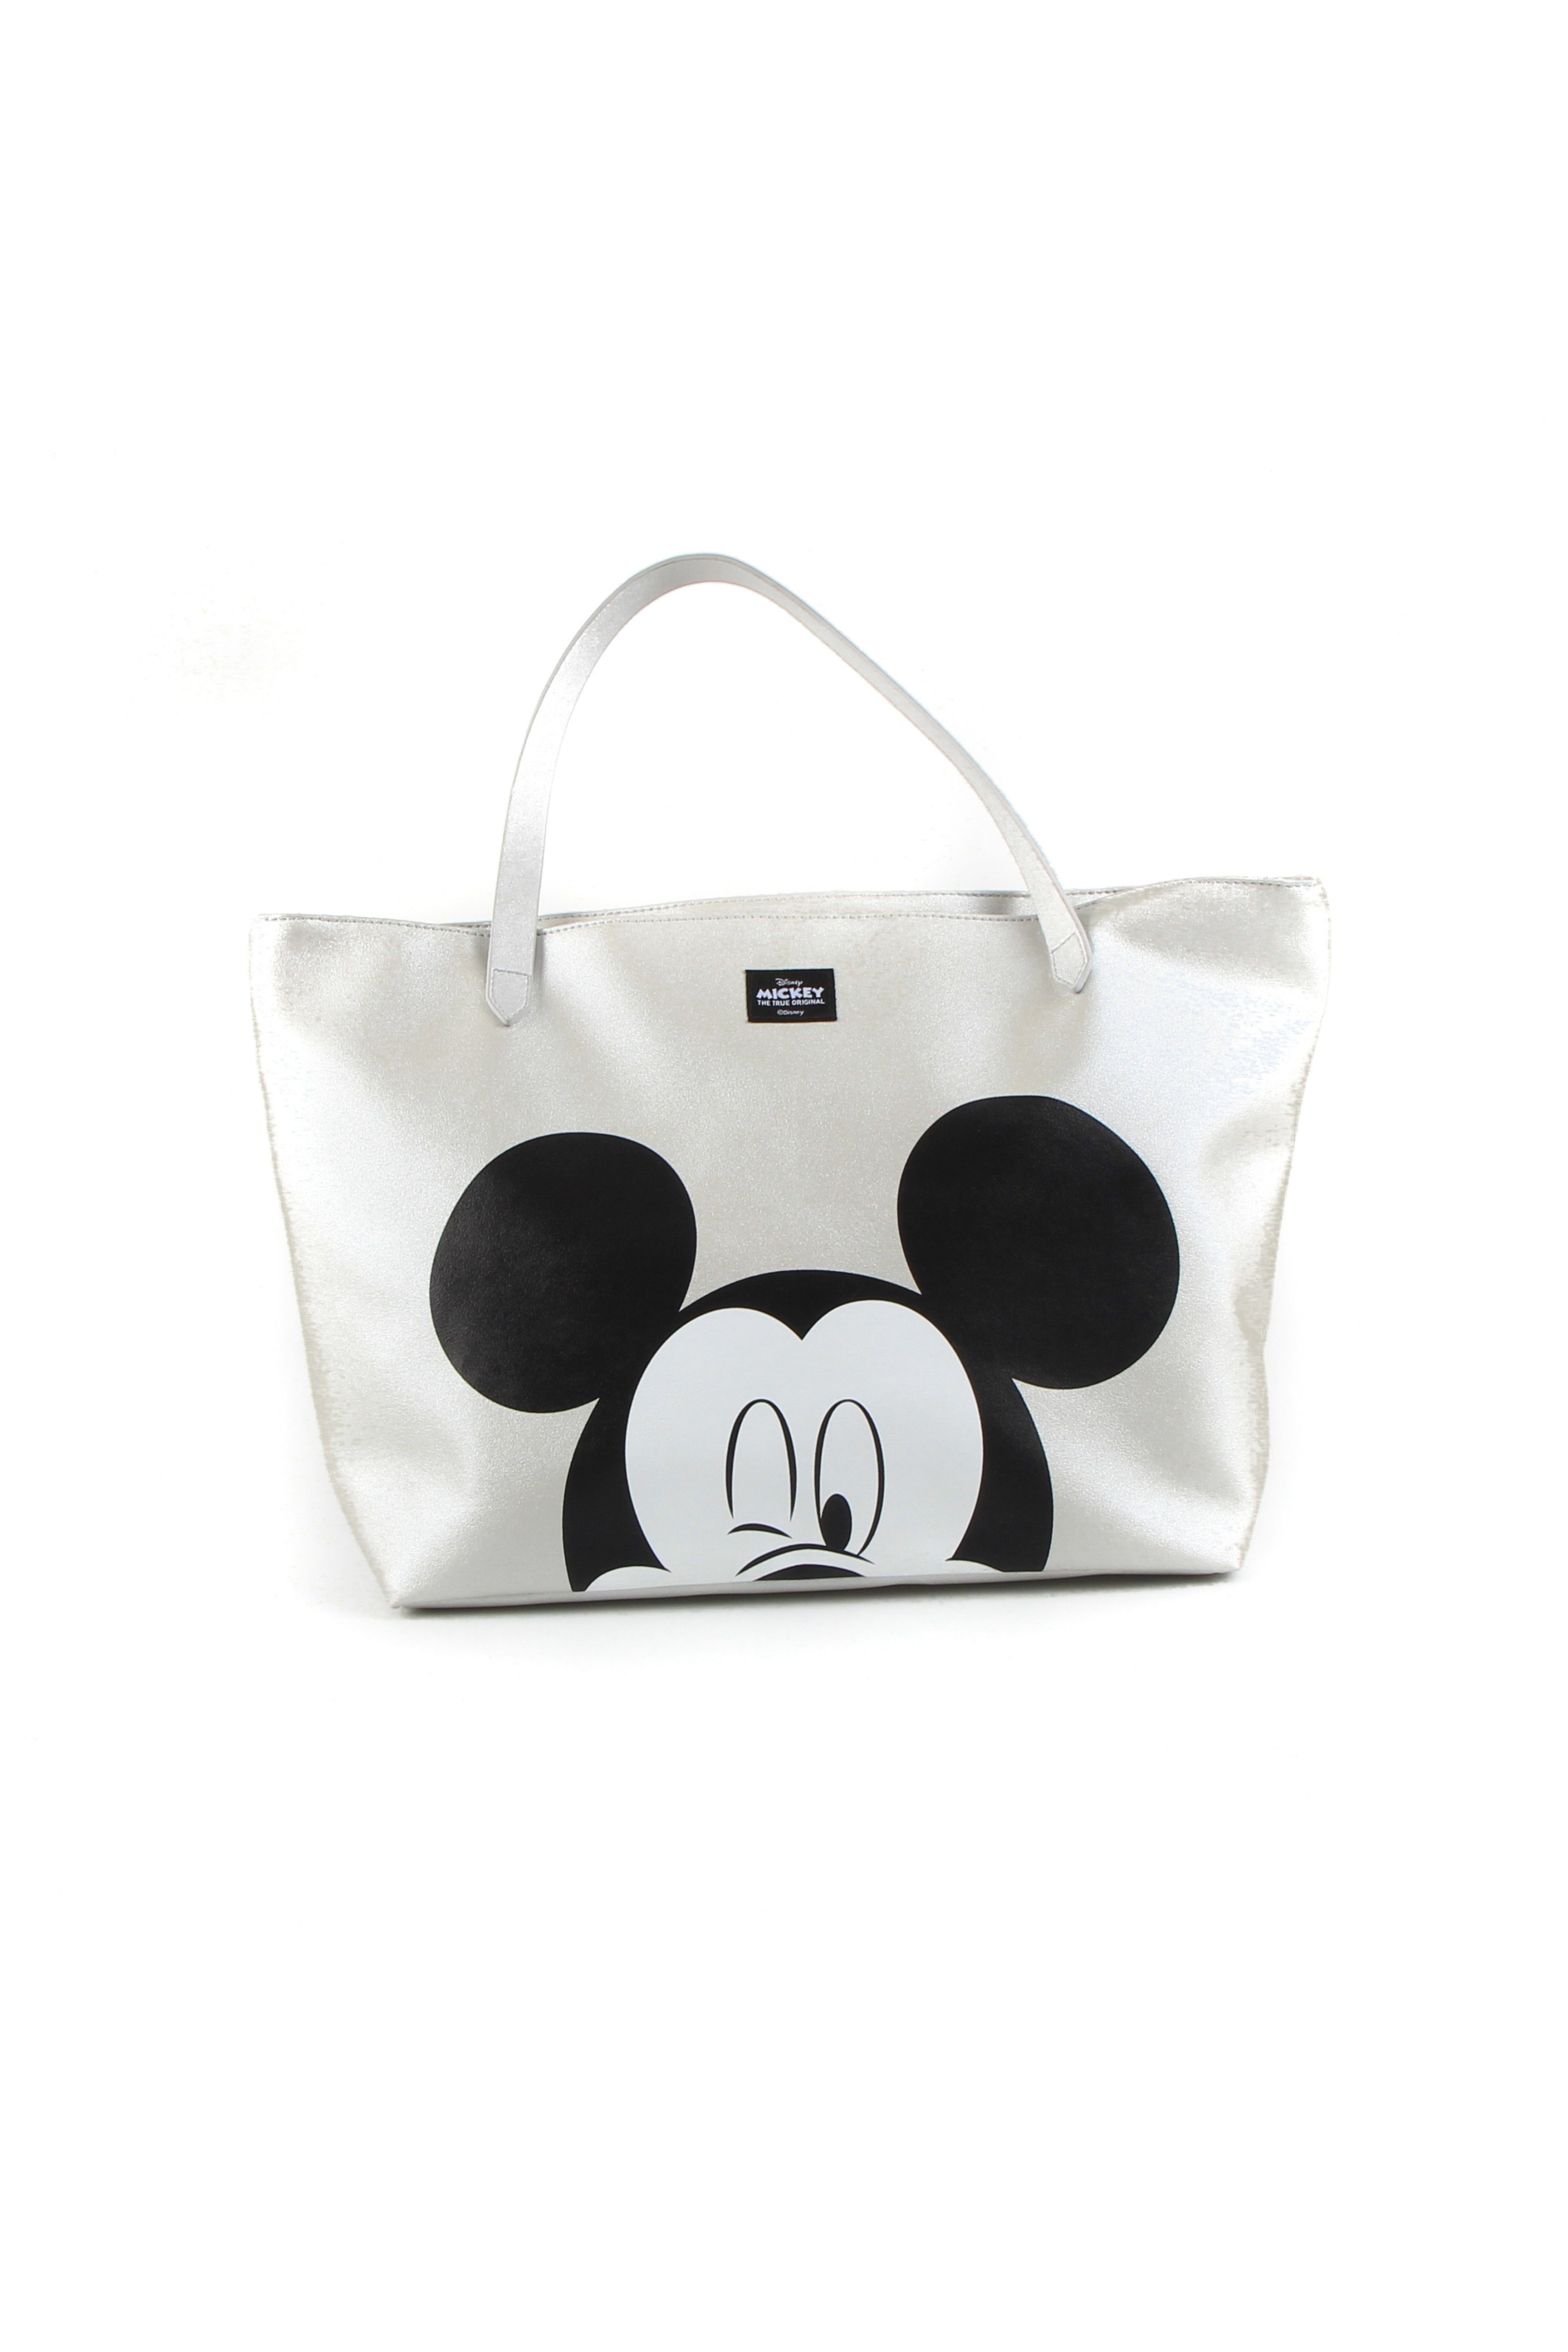 Disney Minnie Mouse Tragetasche Shopper Tasche Disney Minnie Mouse